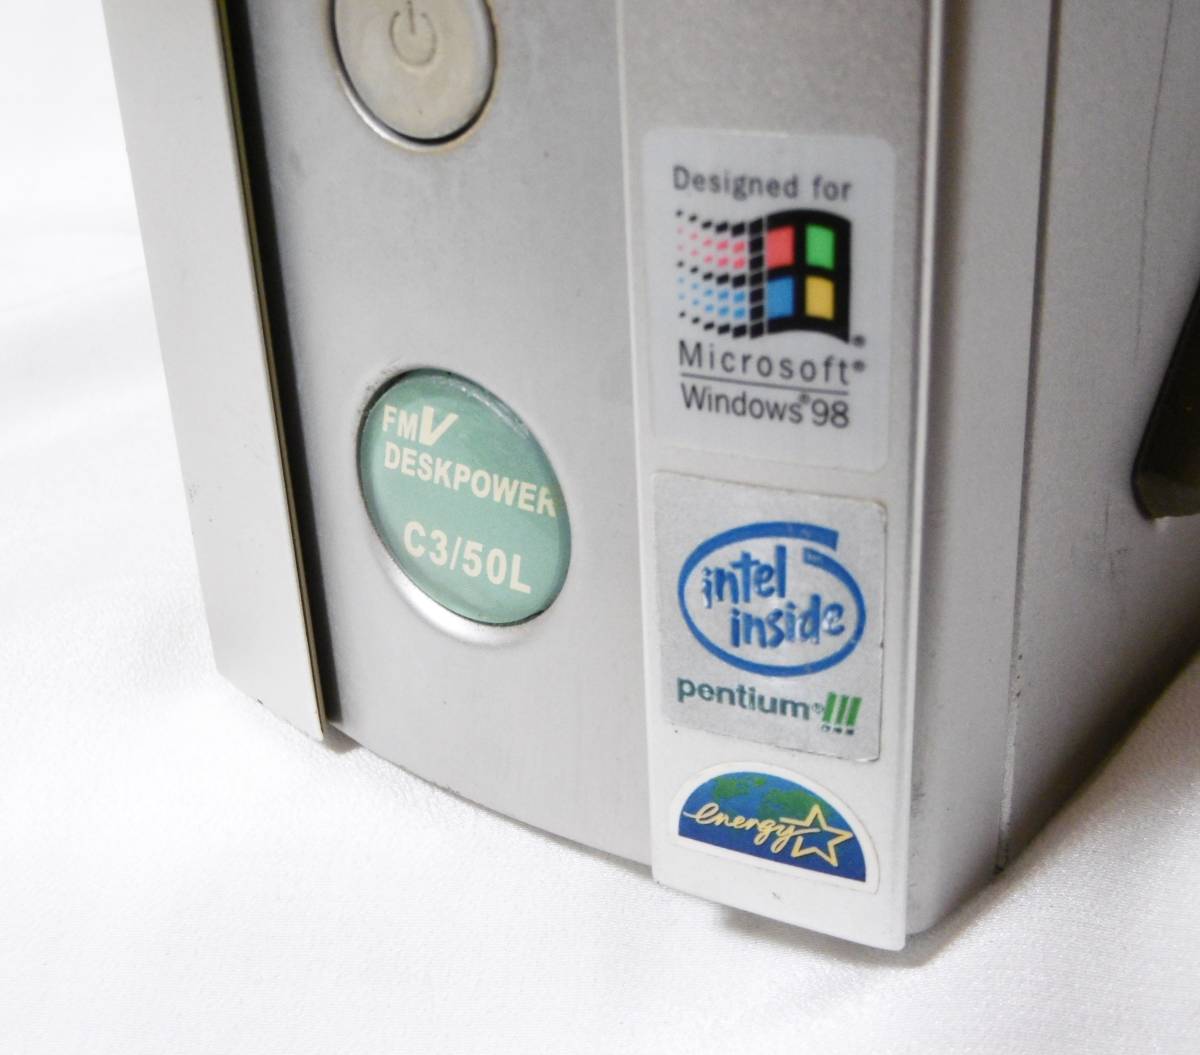 OS Windows 98 SE ◆◇◆ 富士通 コンパクトモデルPC ◆◇◆ FMV DESKPOWER C3/50L ◆◇◆ PentiumIII 500MHz チップセット Intel810Eの画像3